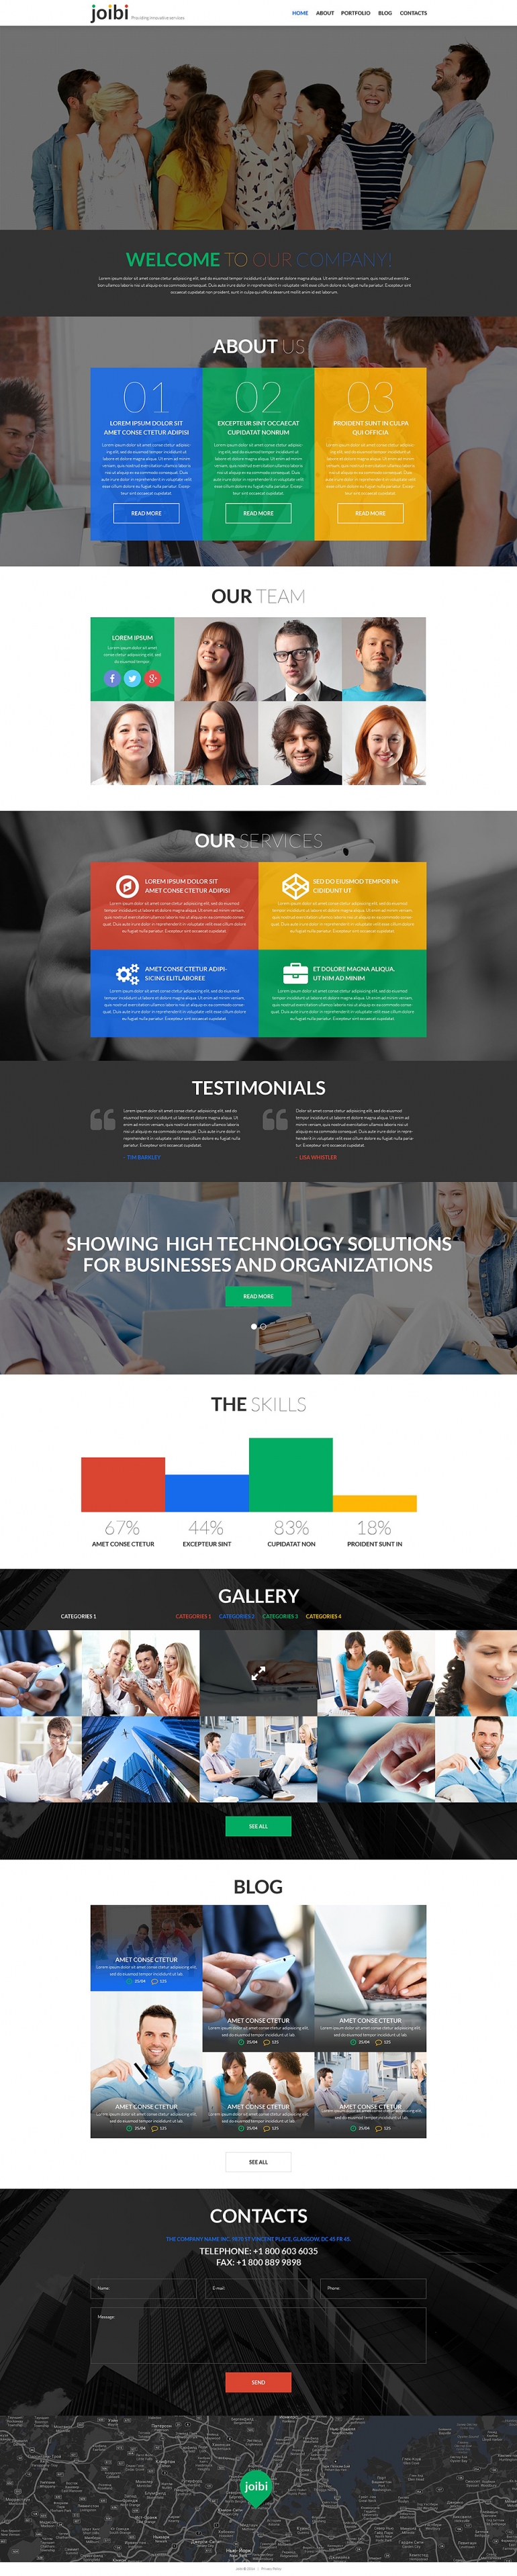 Business Services Promotion Thiet ke website video background